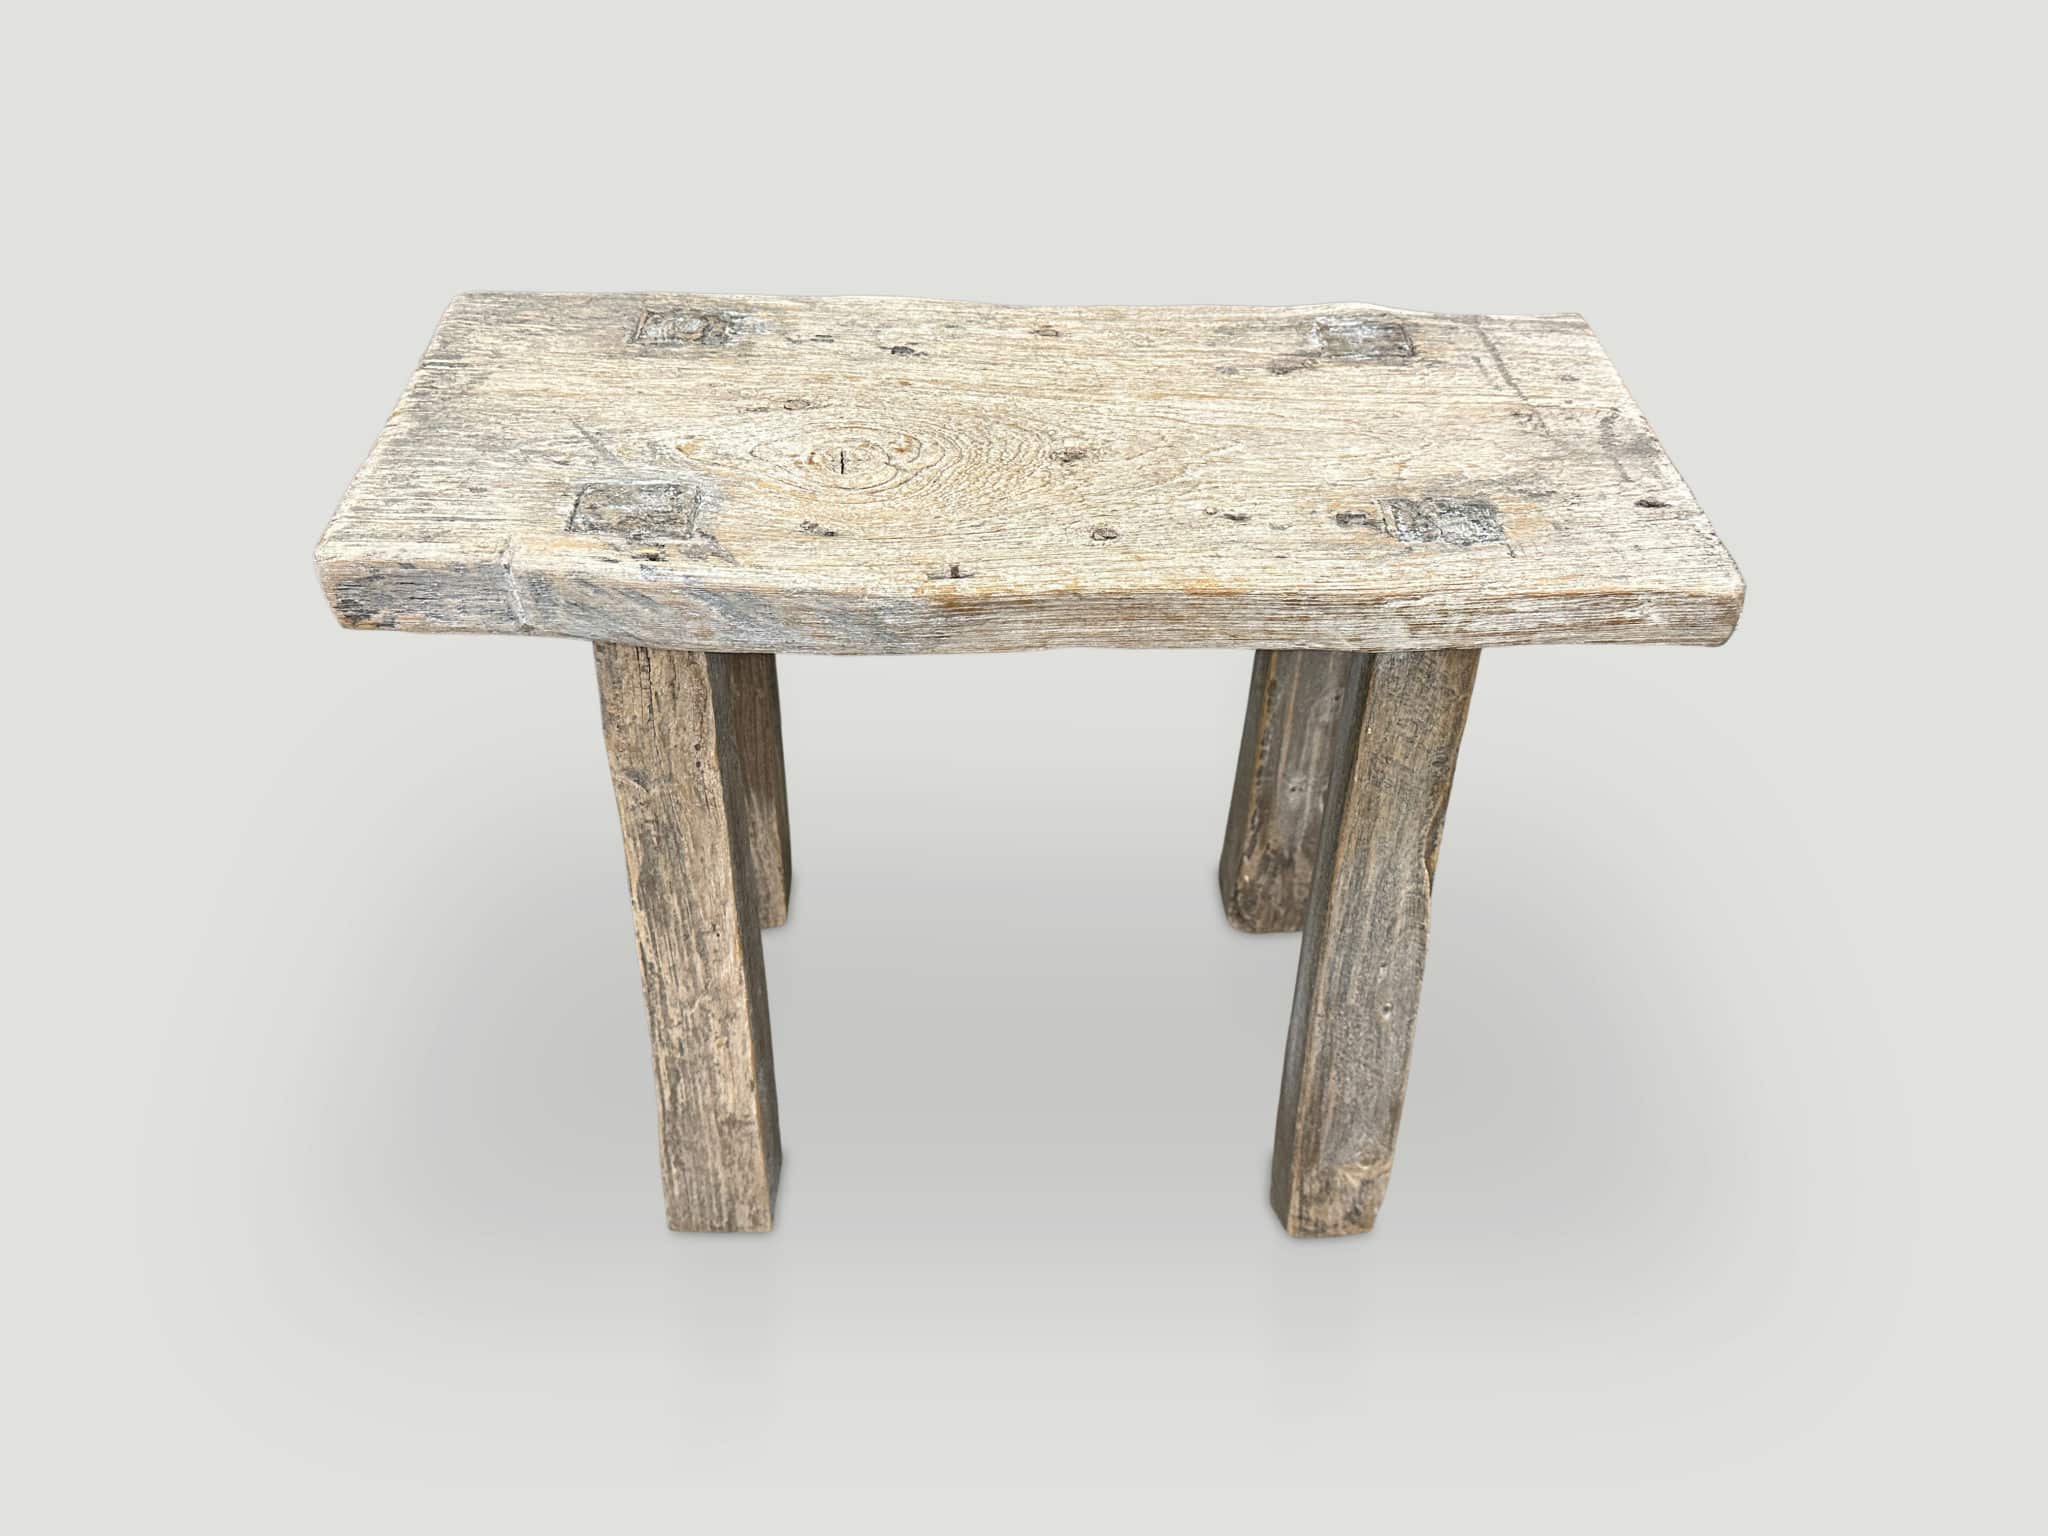 natural aged teak wood bench or stool